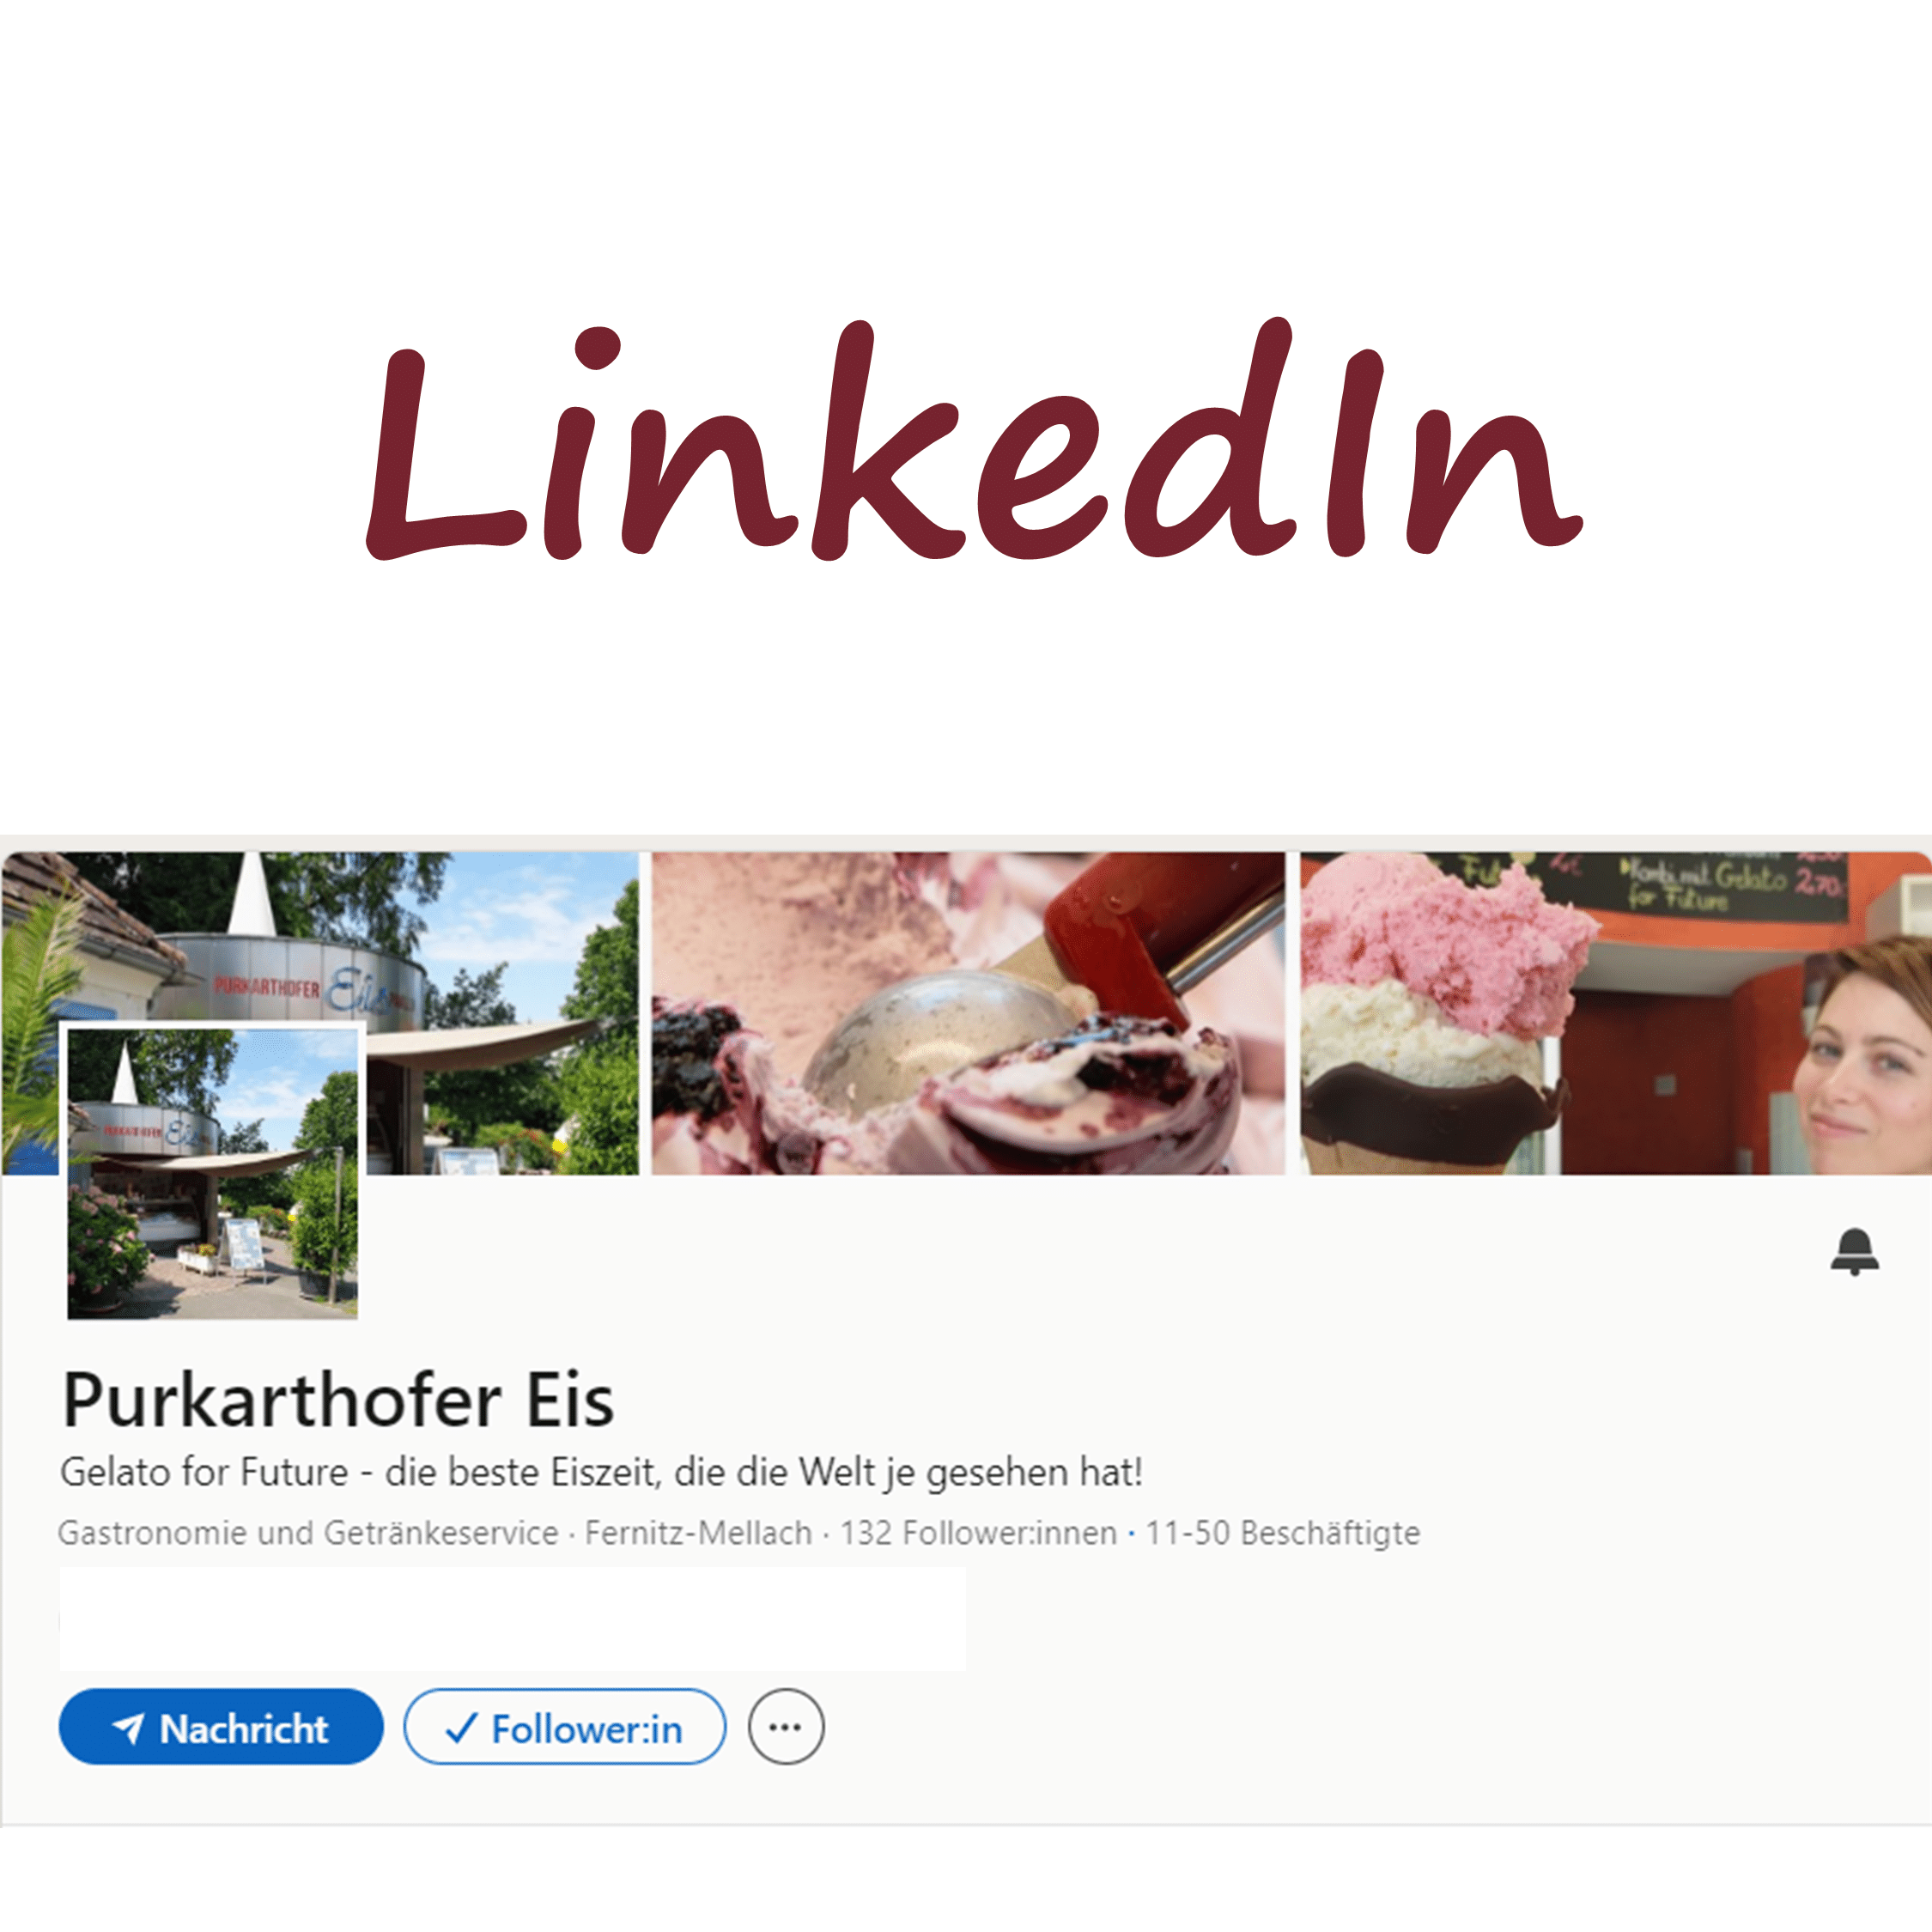 Purkarthofer Eis ist nun auch auf der Social Media Plattform LinkedIn!